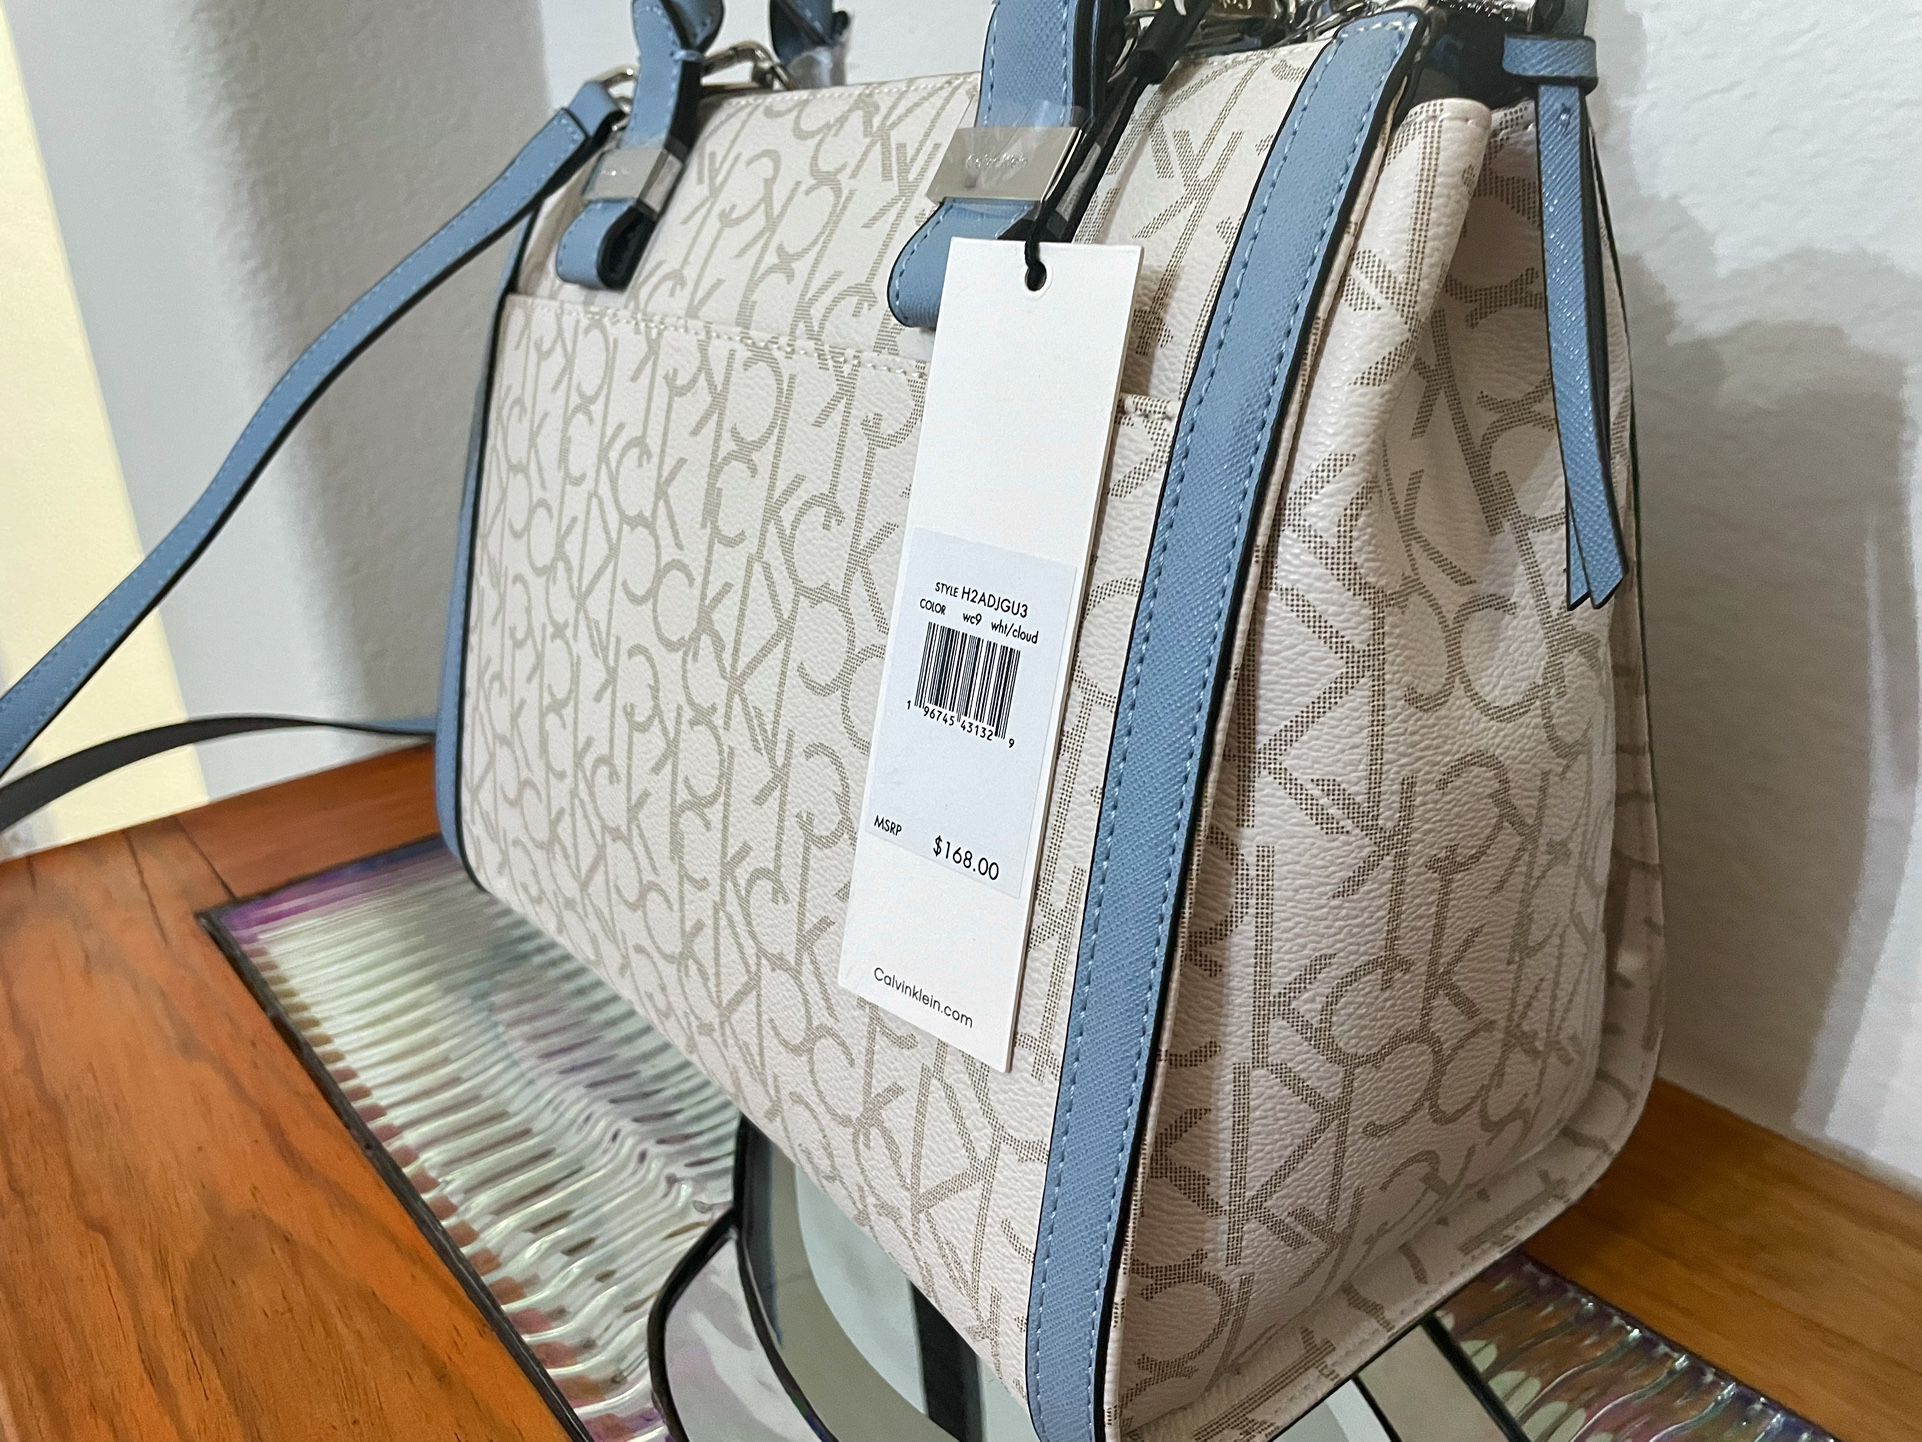 Calvin Klein Lucy Shoulder Bag for Sale in El Paso, TX - OfferUp